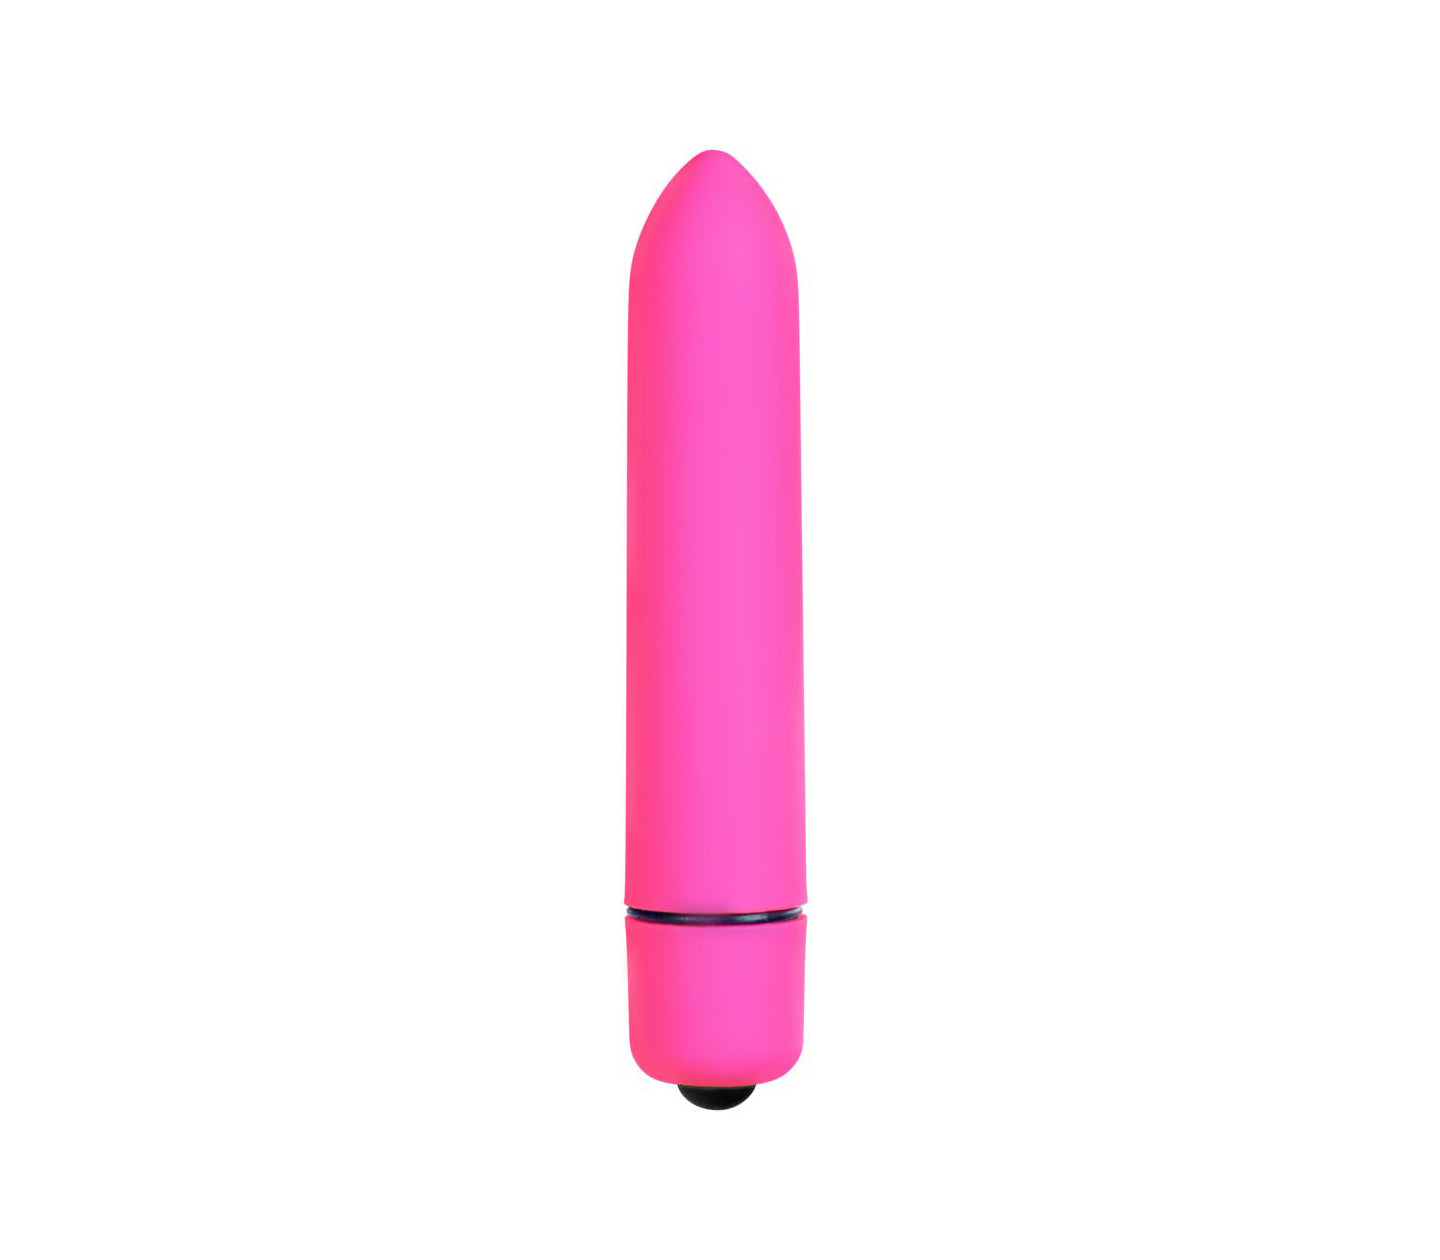 Bul001-10 Speed Bullet W/ 7 Functions Vibrator Hot Pink - Club X